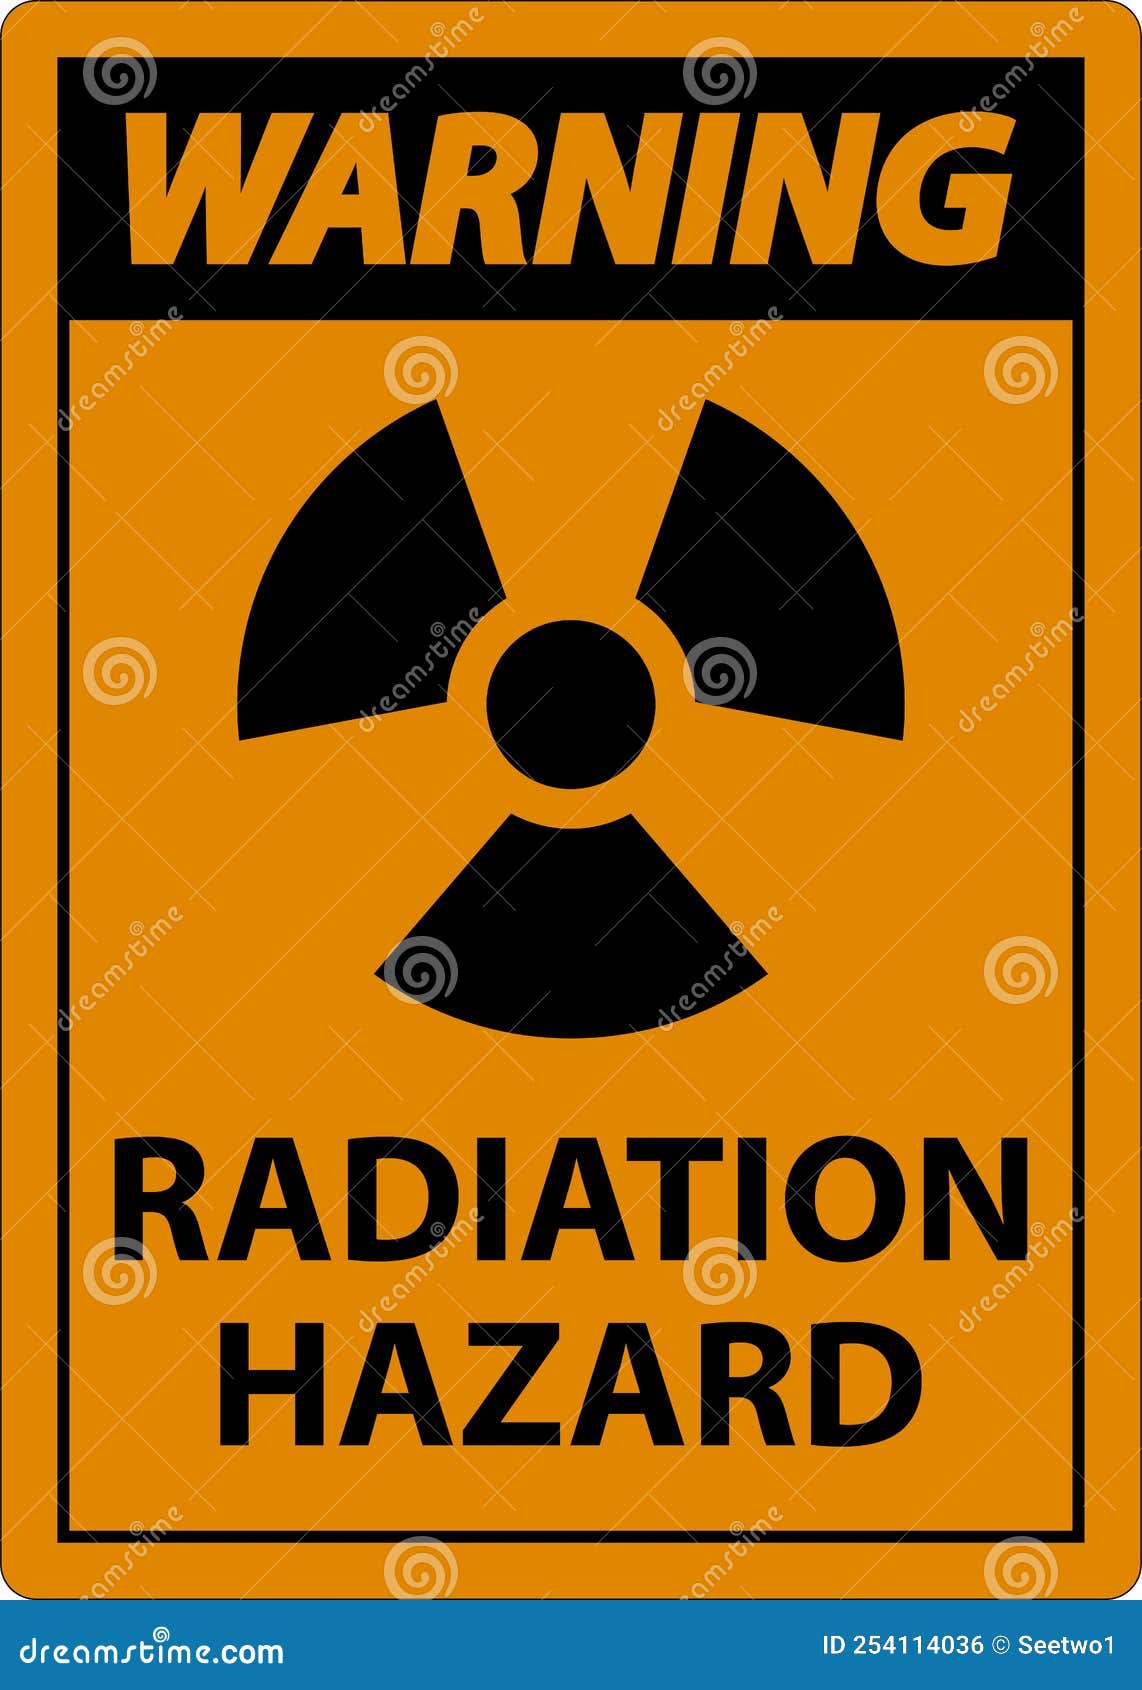 Warning Radiation Hazard Sign on White Background Stock Vector ...